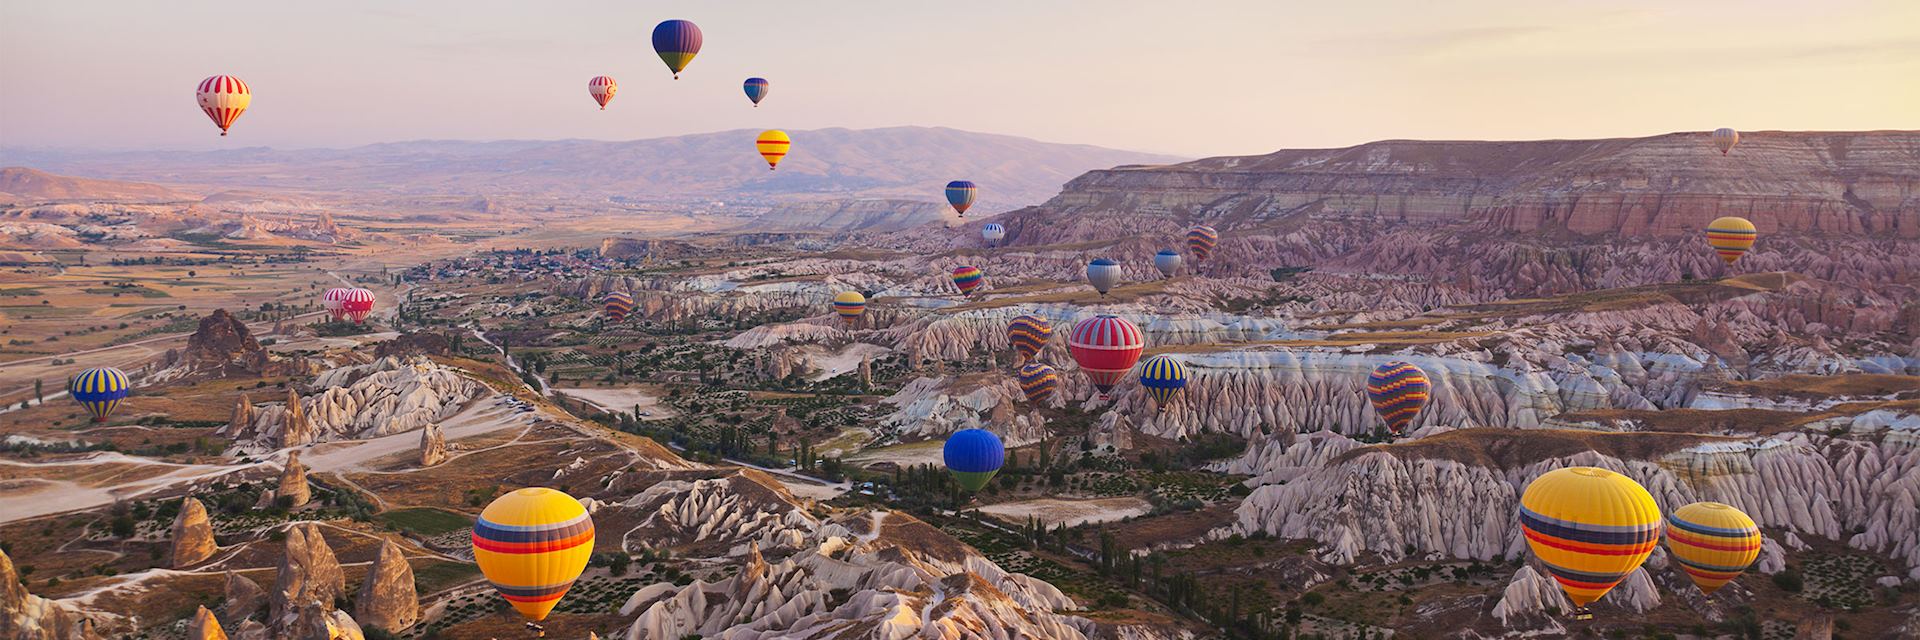 Hot air balloons floating over Cappadocia